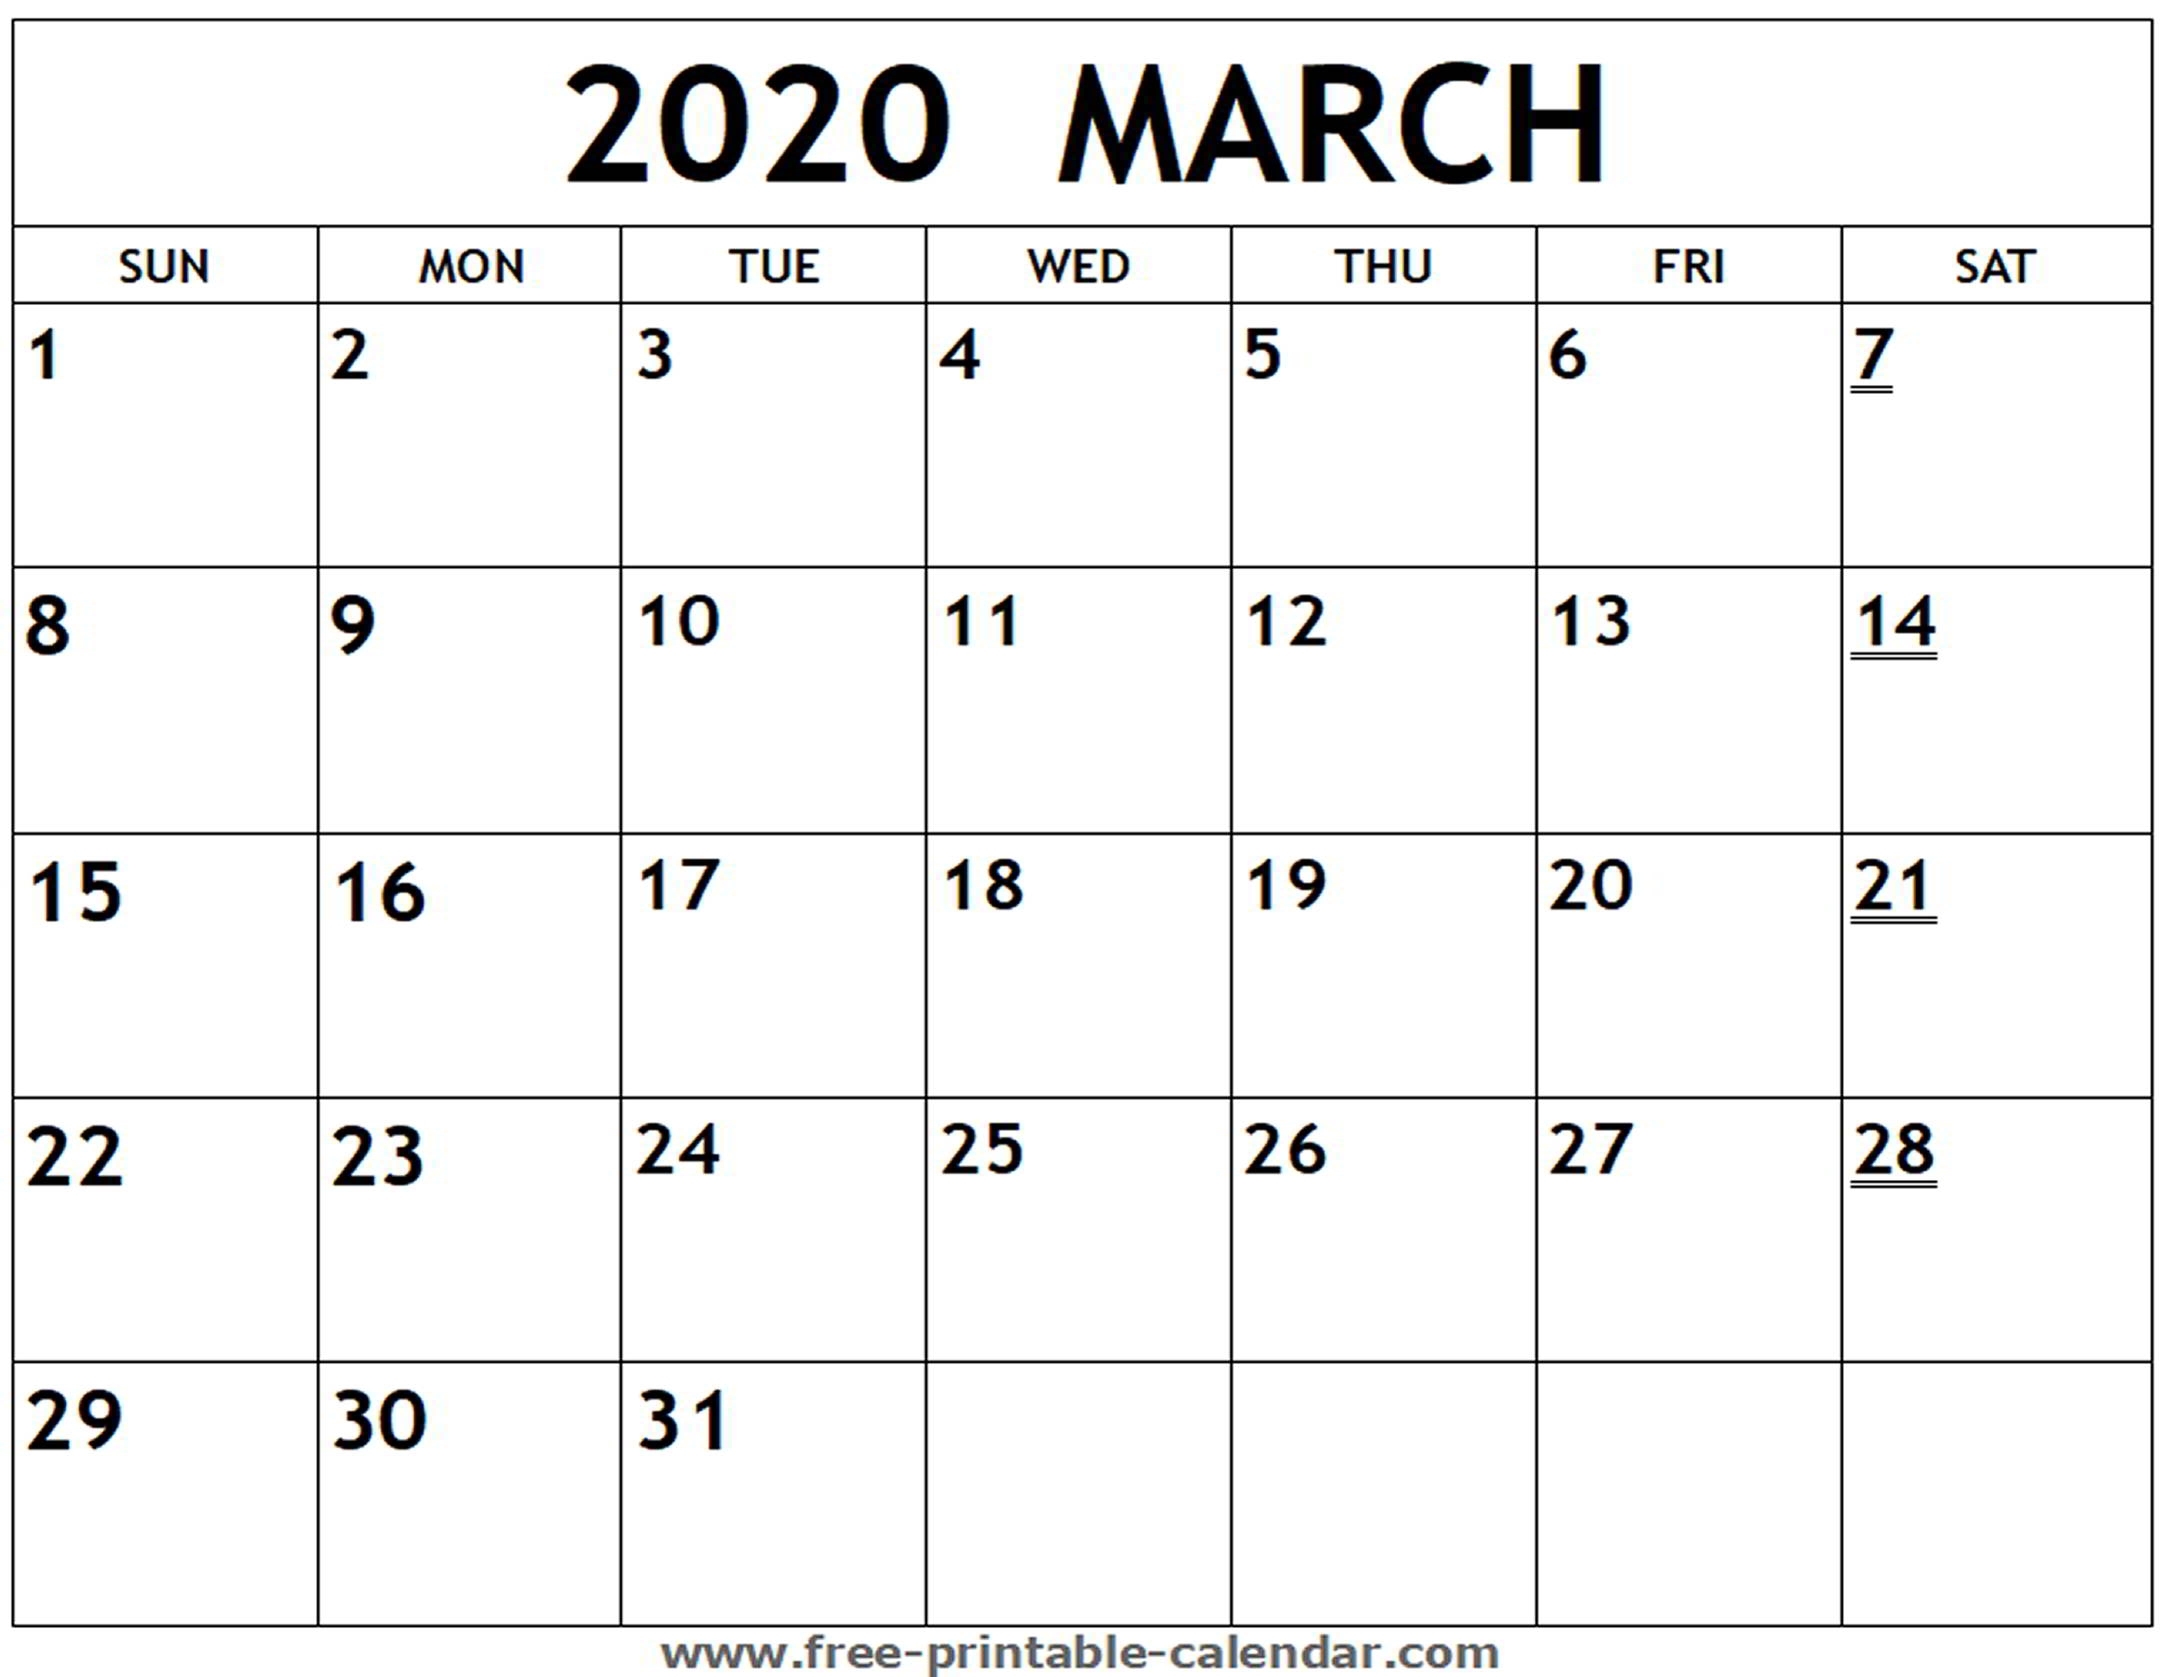 Printable 2020 March Calendar - Free-Printable-Calendar